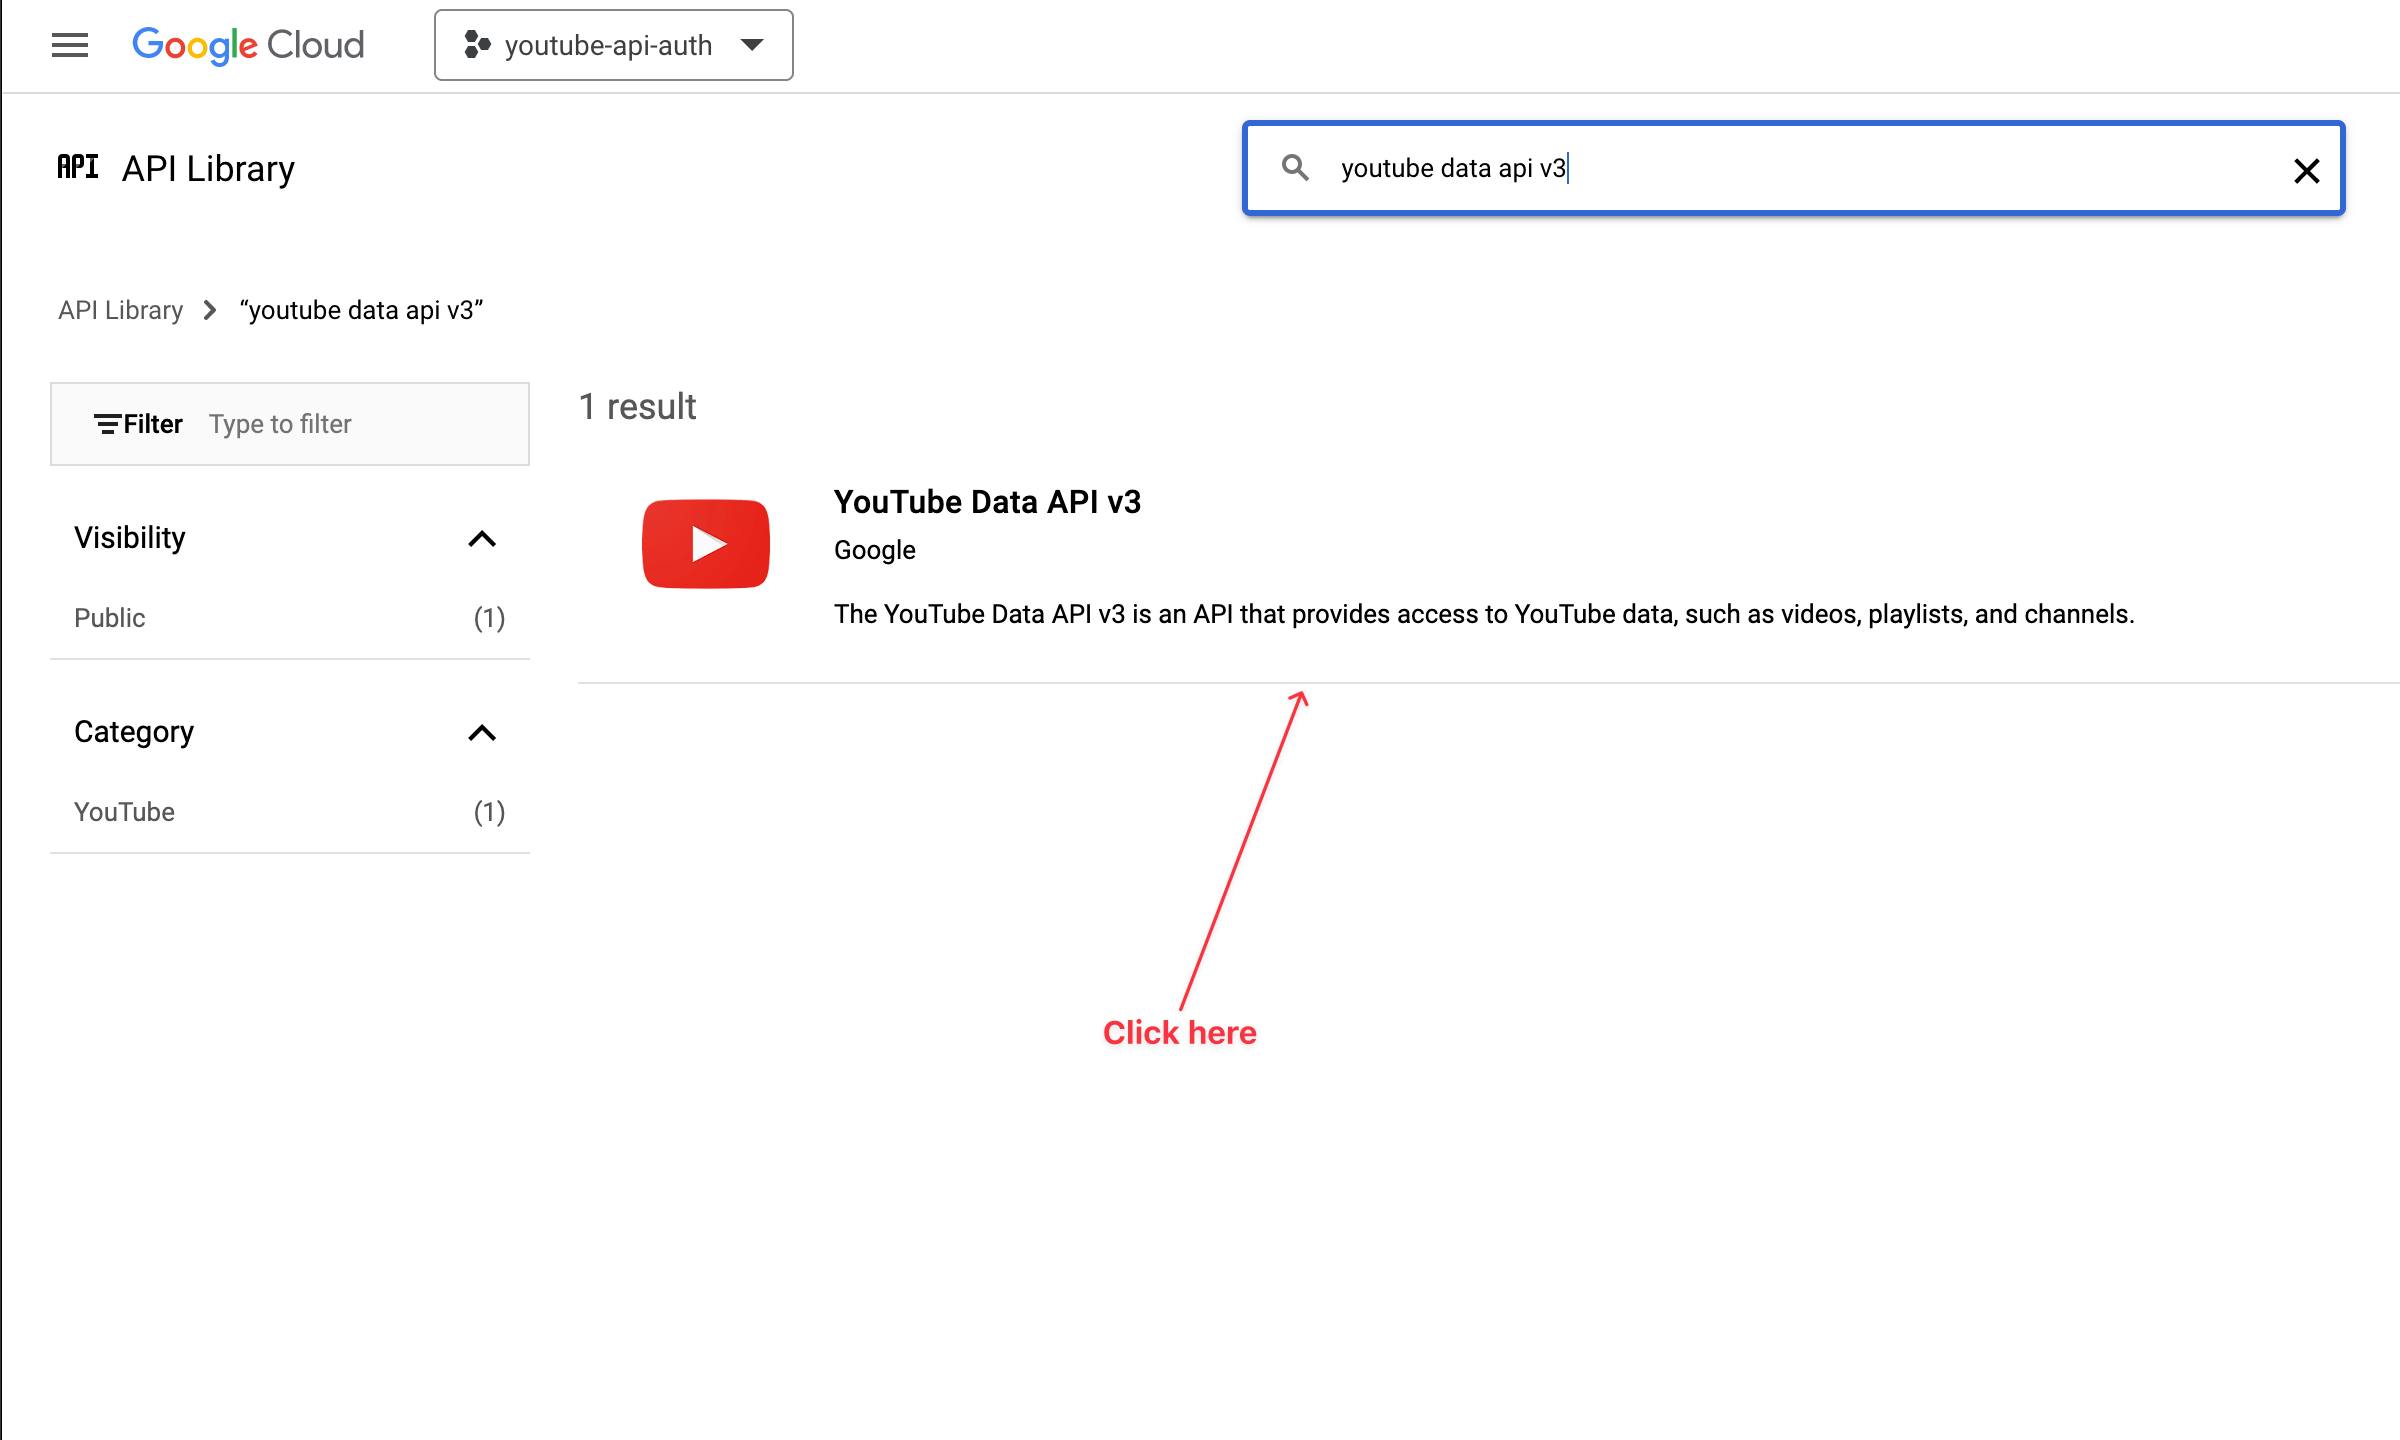 Search the YouTube Data API v3 among the Google APIs.